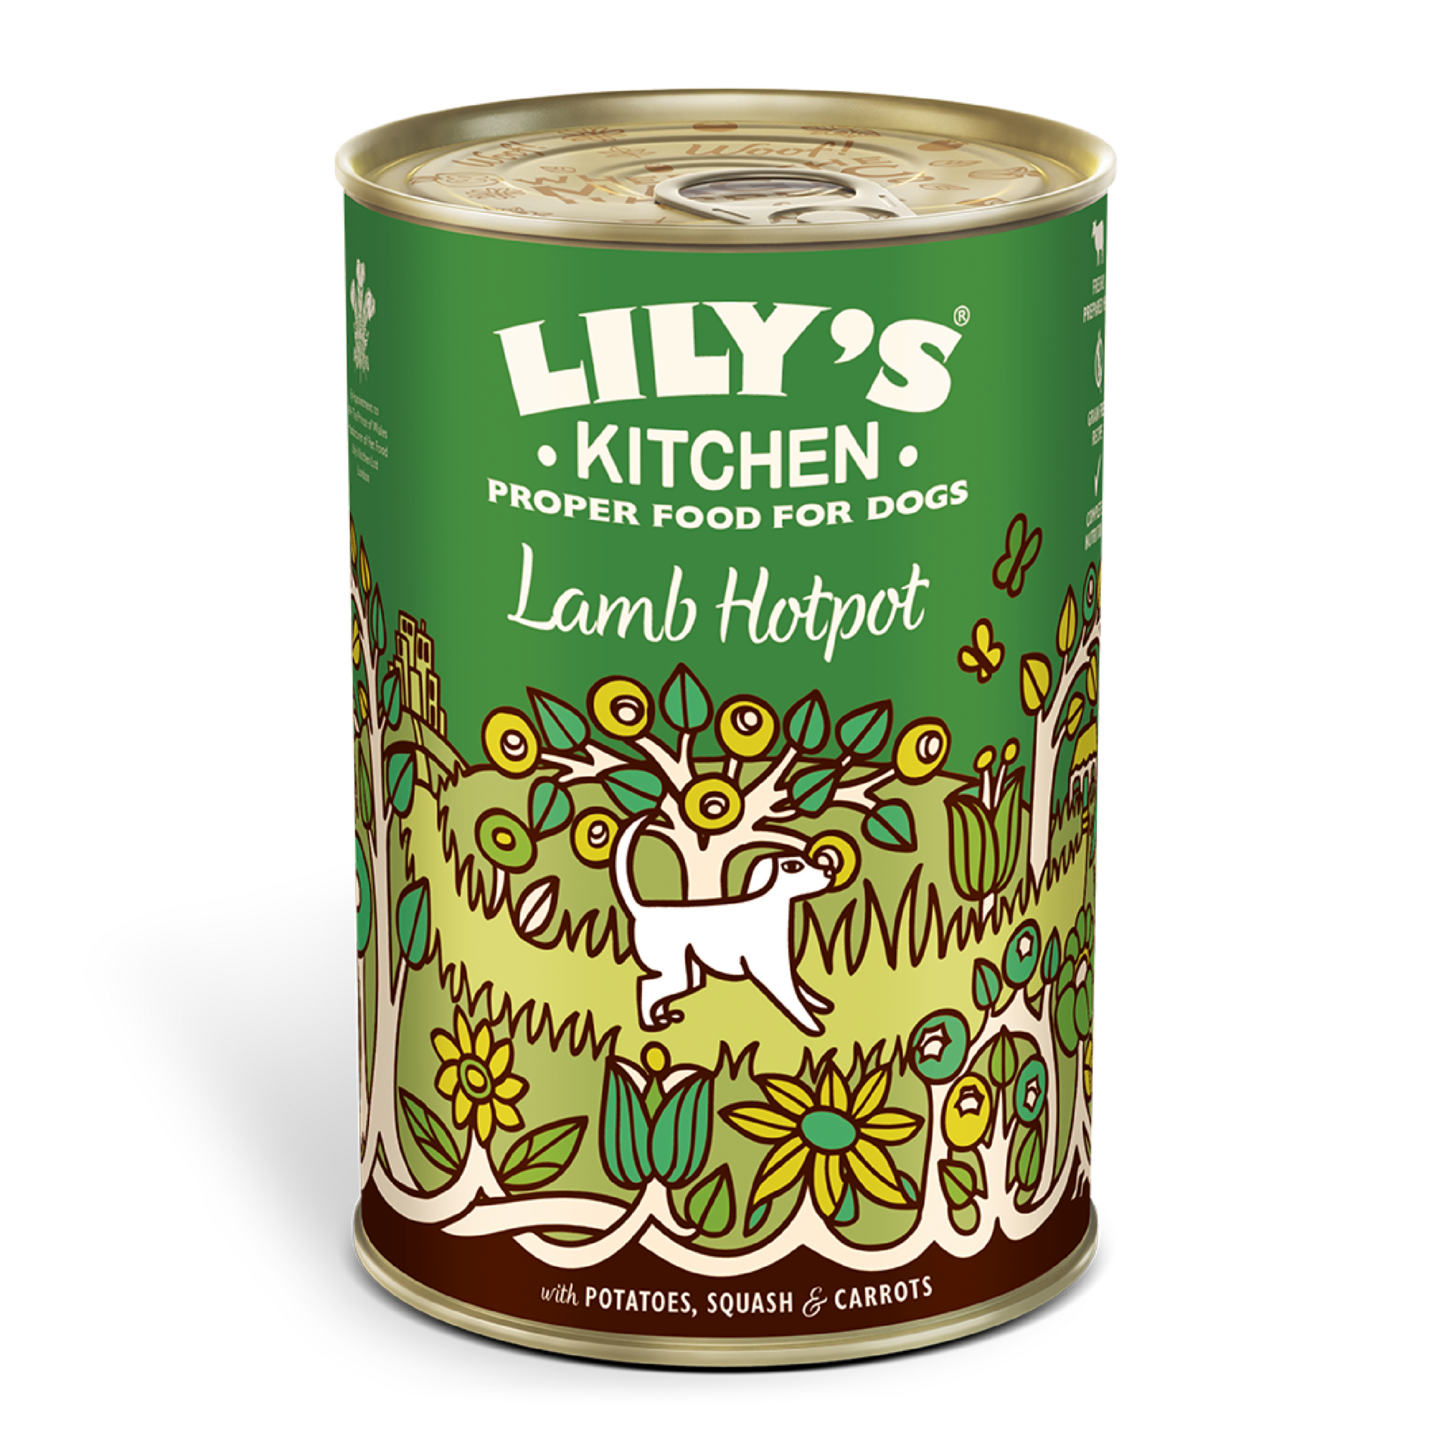 Lilys Kitchen 400g Lamb Hotpot koiranruoka lammas